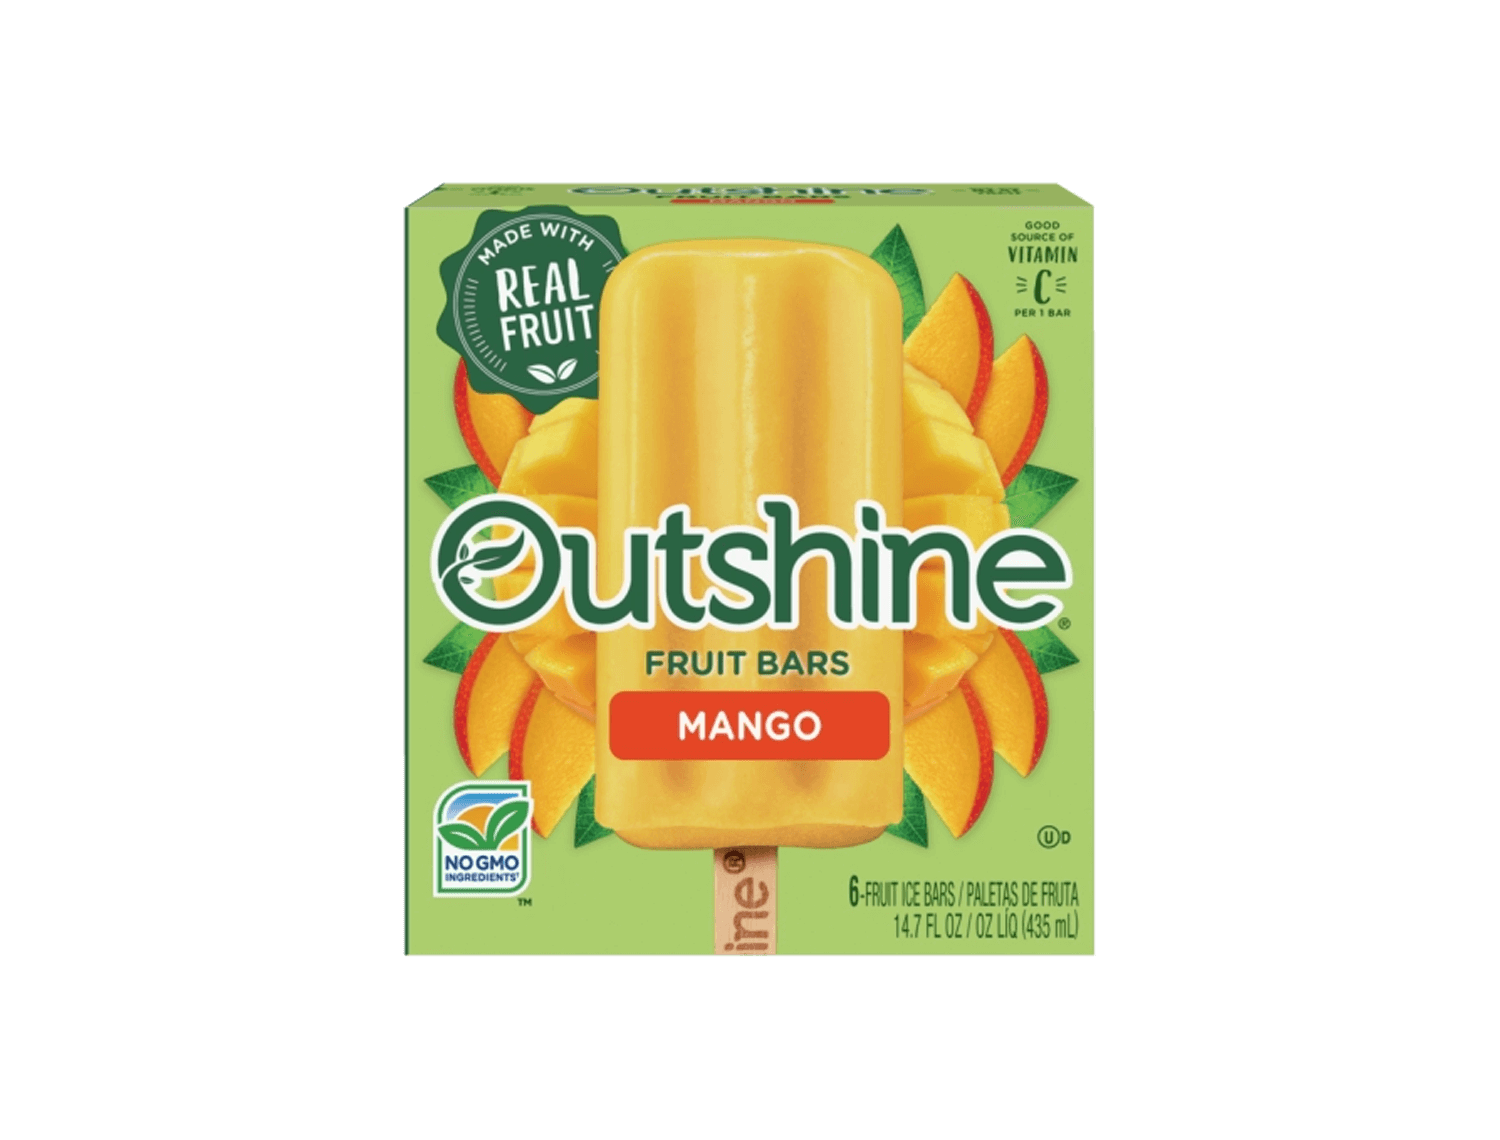 http://www.icecream.com/content/dam/dreyersgrandicecreaminc/us/en/outshine/products/product-pages/Outshine-Mango-Fruit-Bars.png